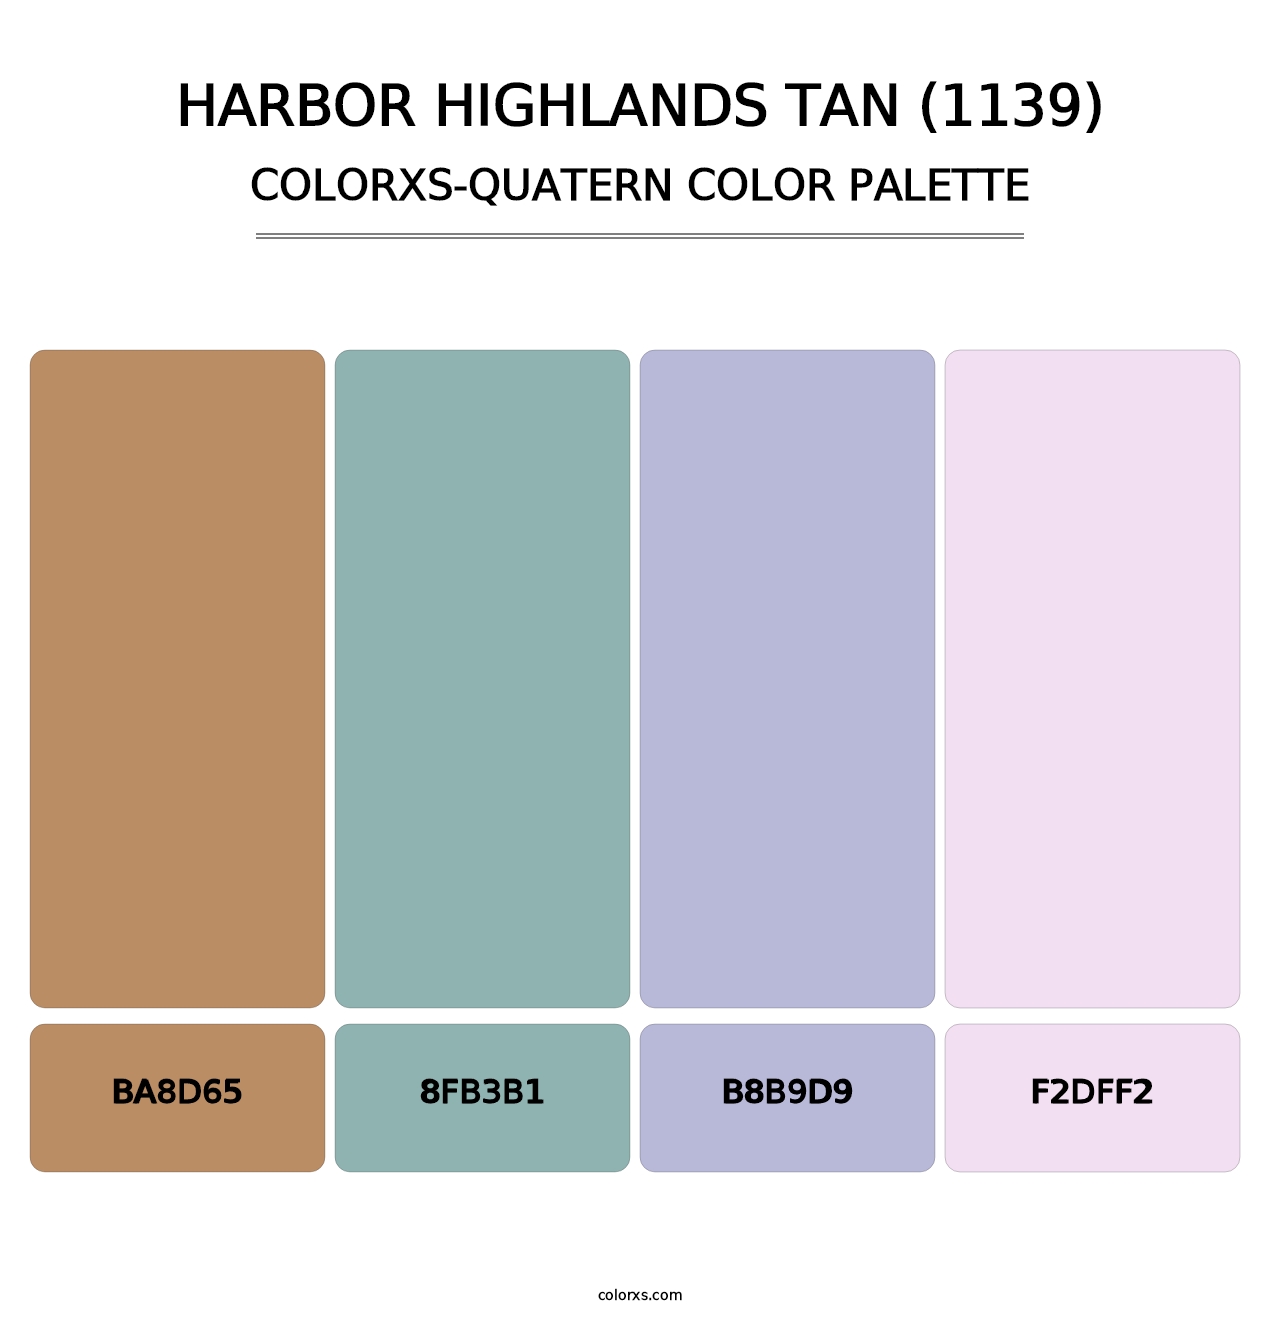 Harbor Highlands Tan (1139) - Colorxs Quatern Palette